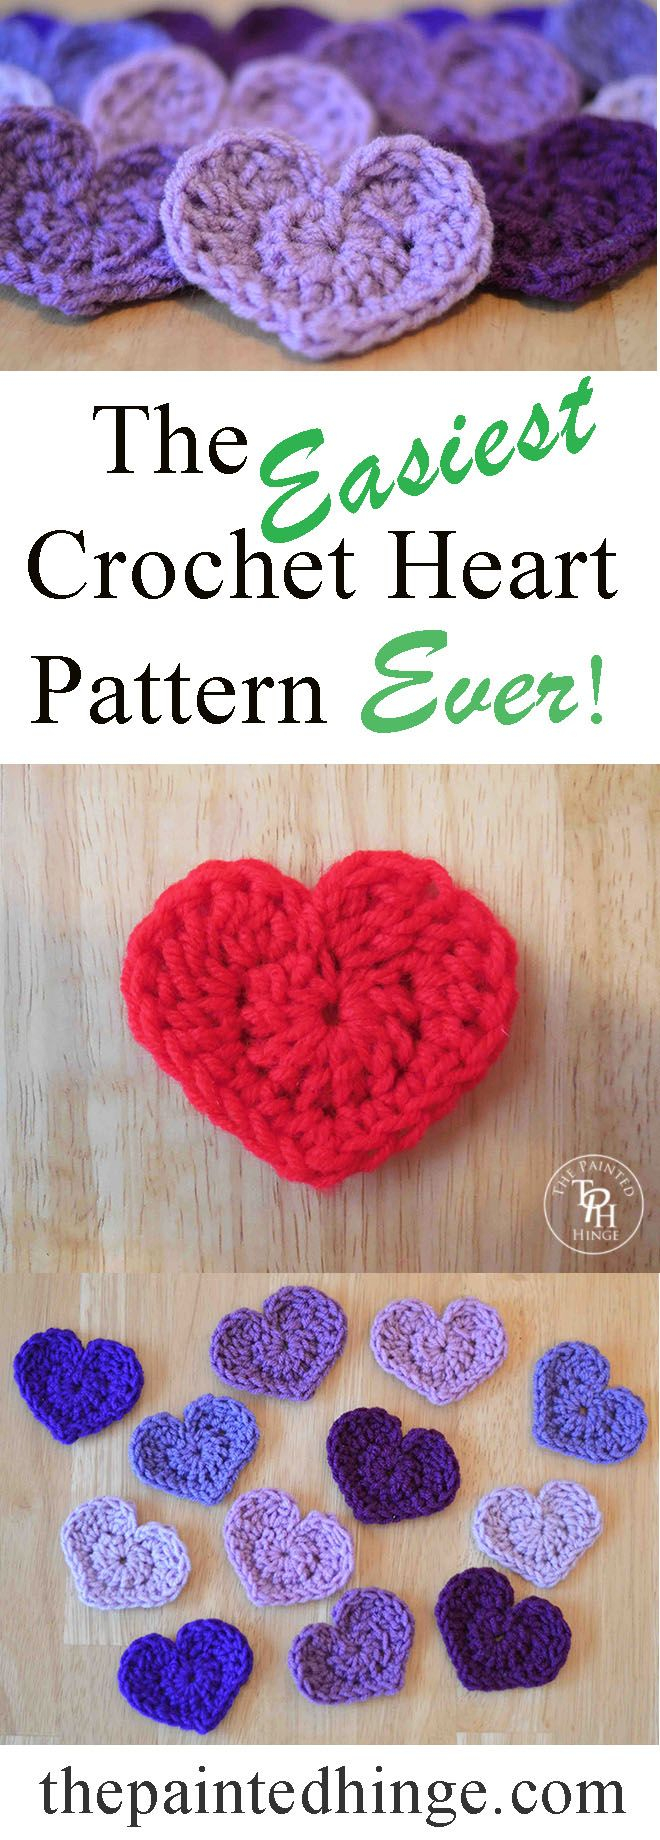 Crochet Heart Pattern The Easiest Heart Crochet Pattern Ever Crochet Ideas And